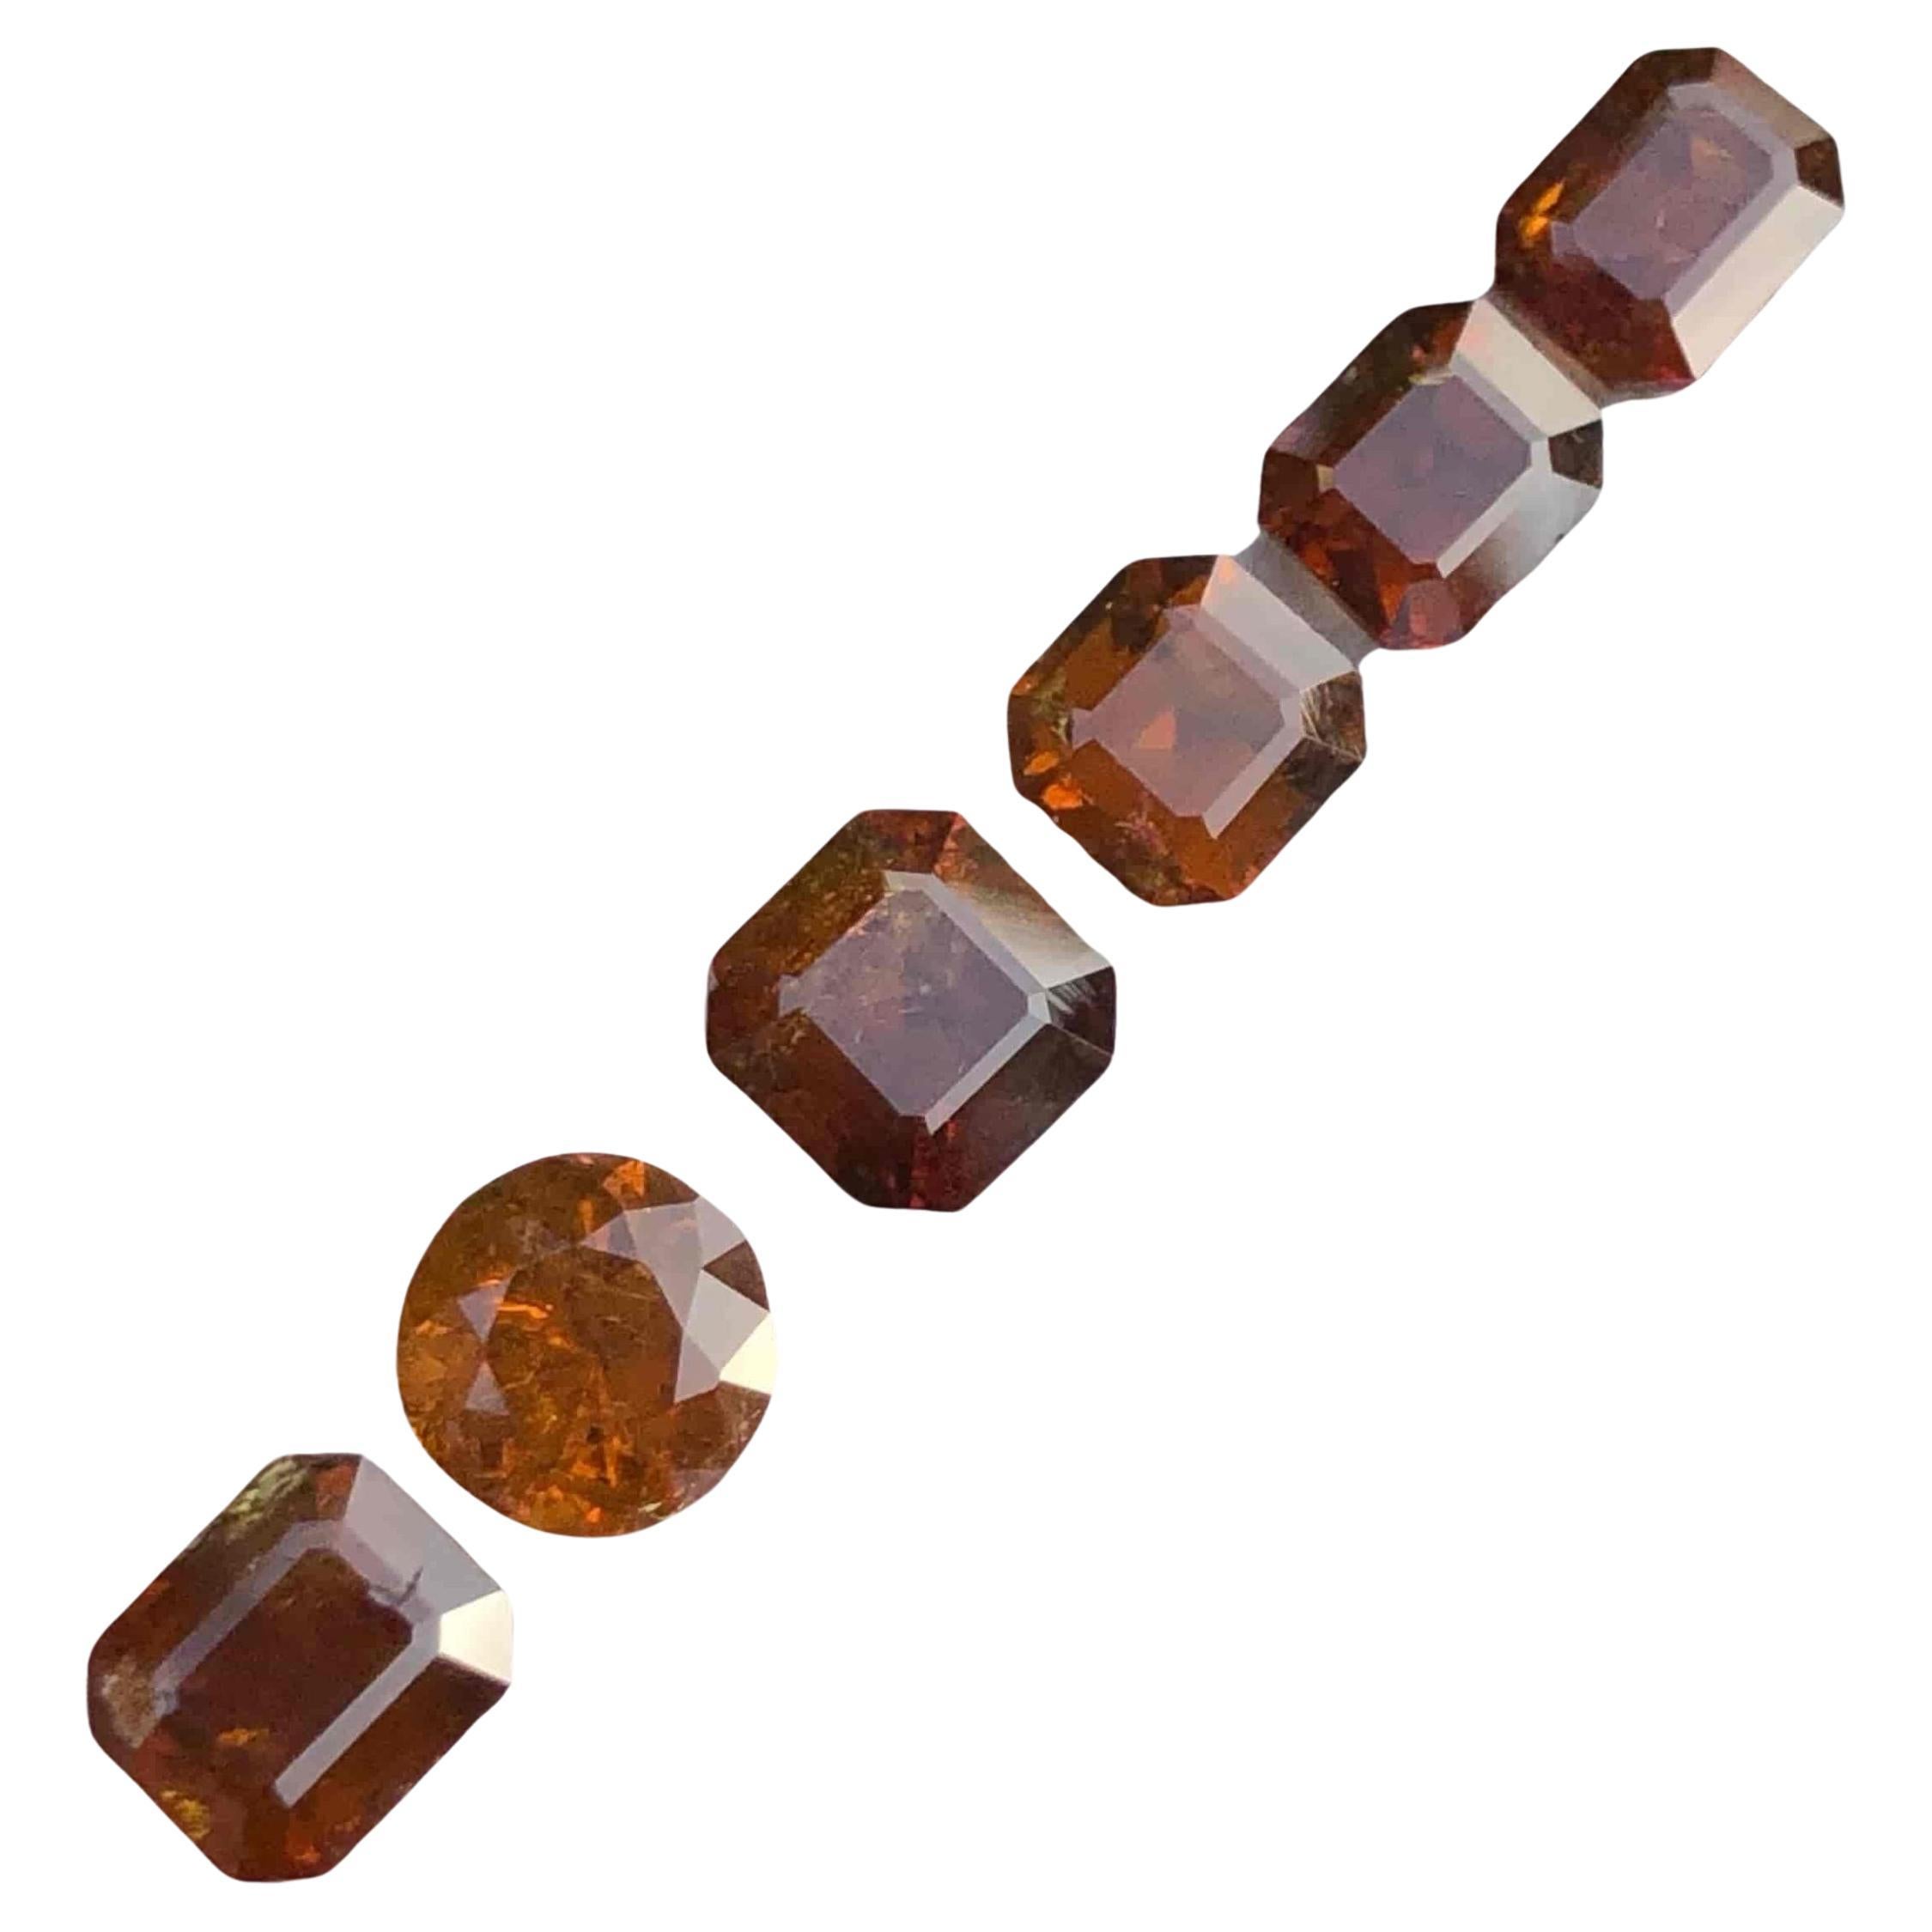 10.15 carats Natural Brown Garnet Stones Lot Loose Gemstones From Mali Africa